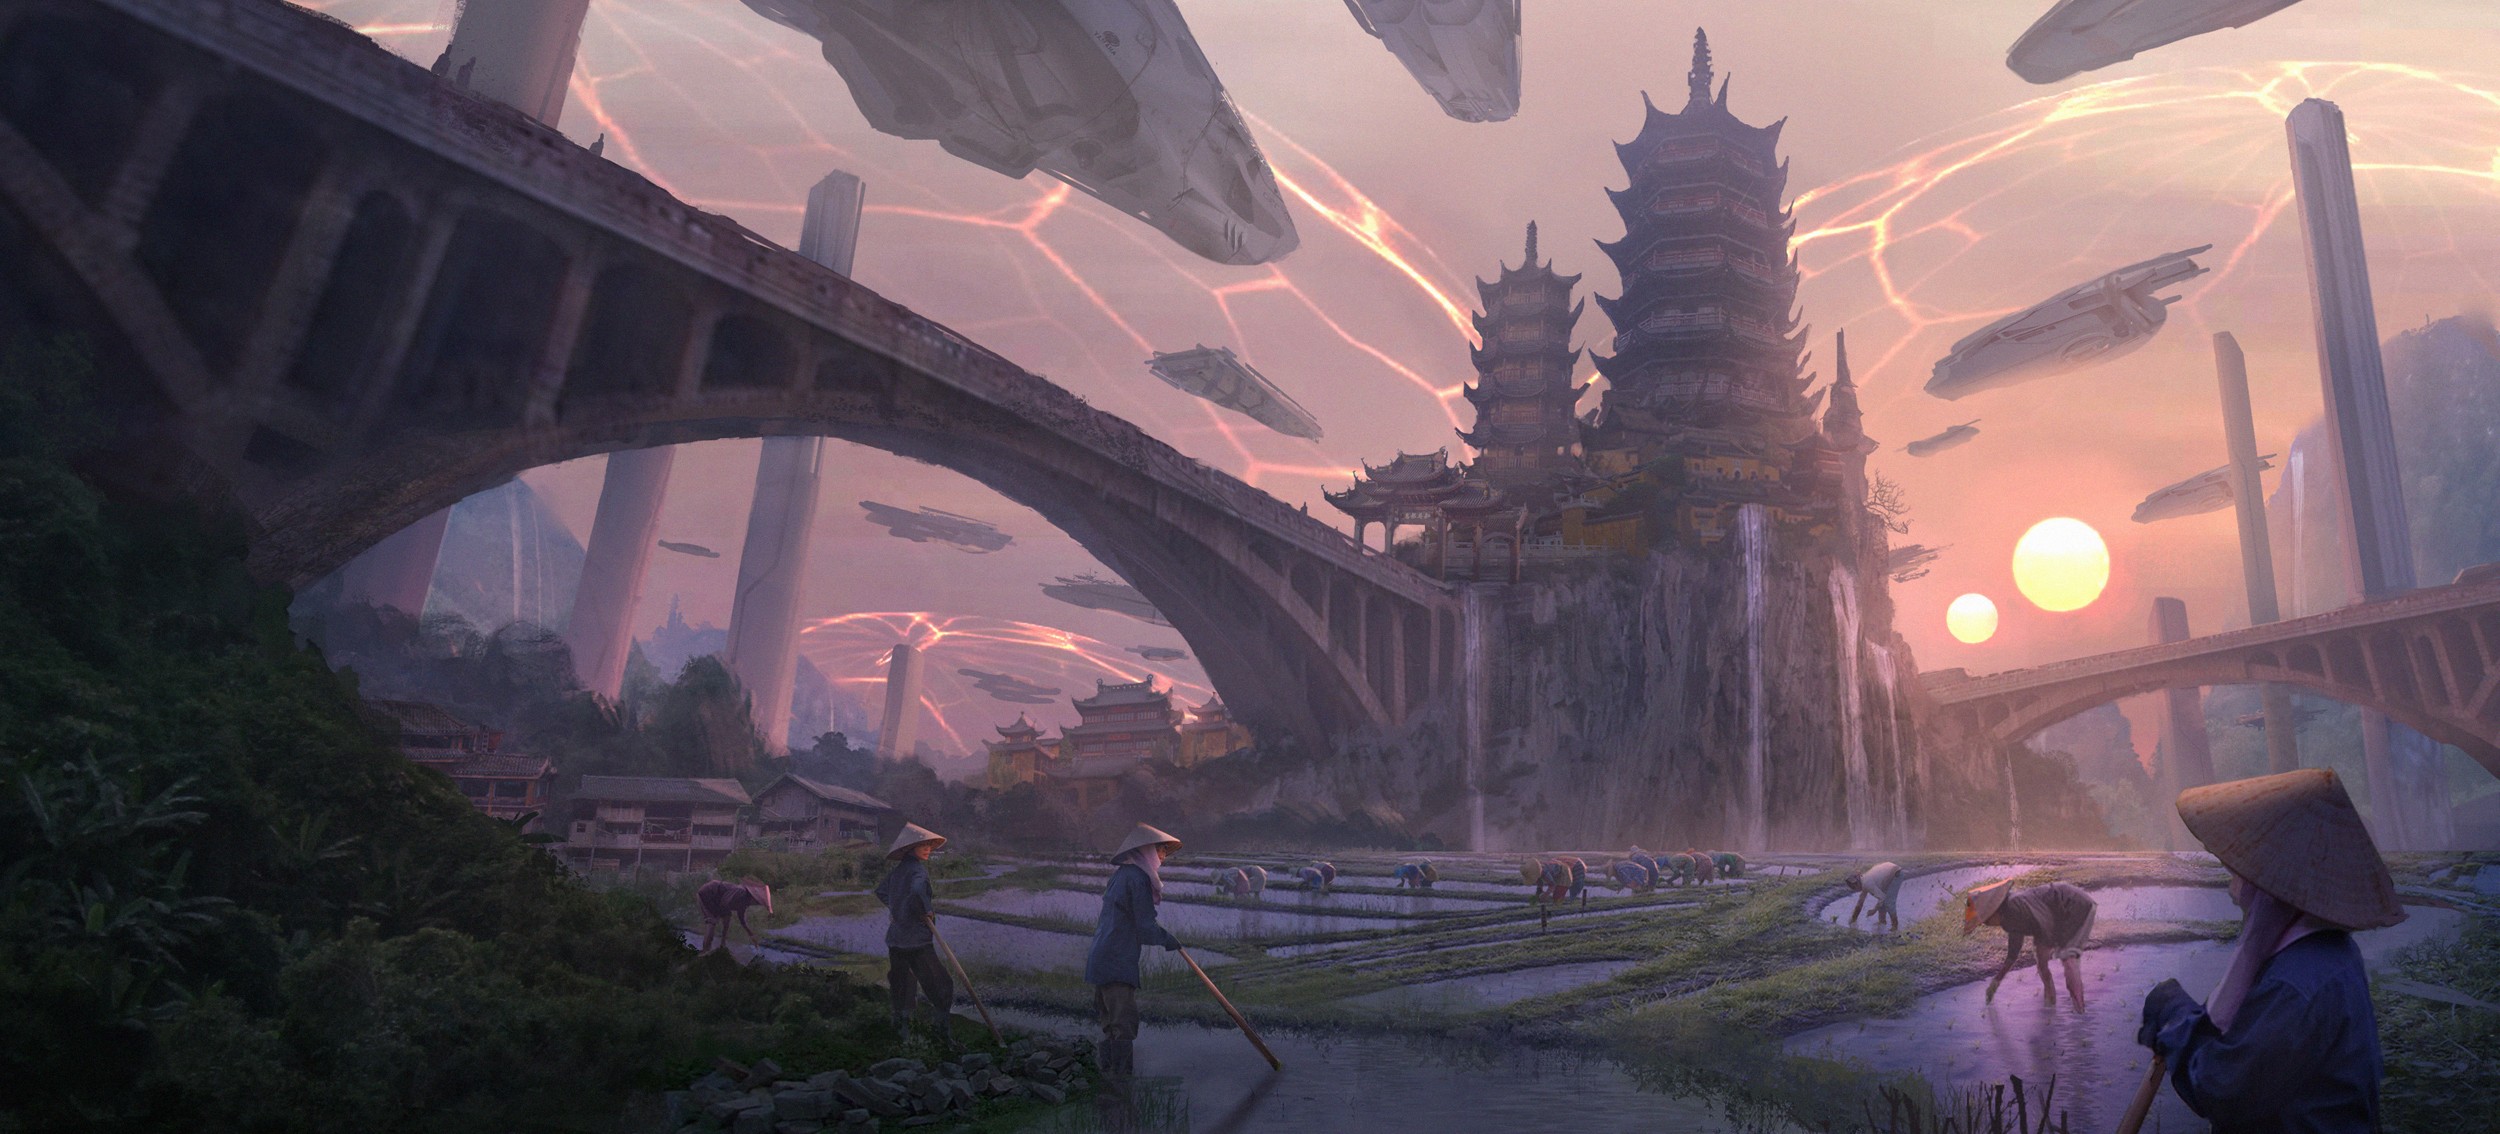 General 2500x1134 science fiction palace futuristic city artwork Agro (Plants) vehicle sky